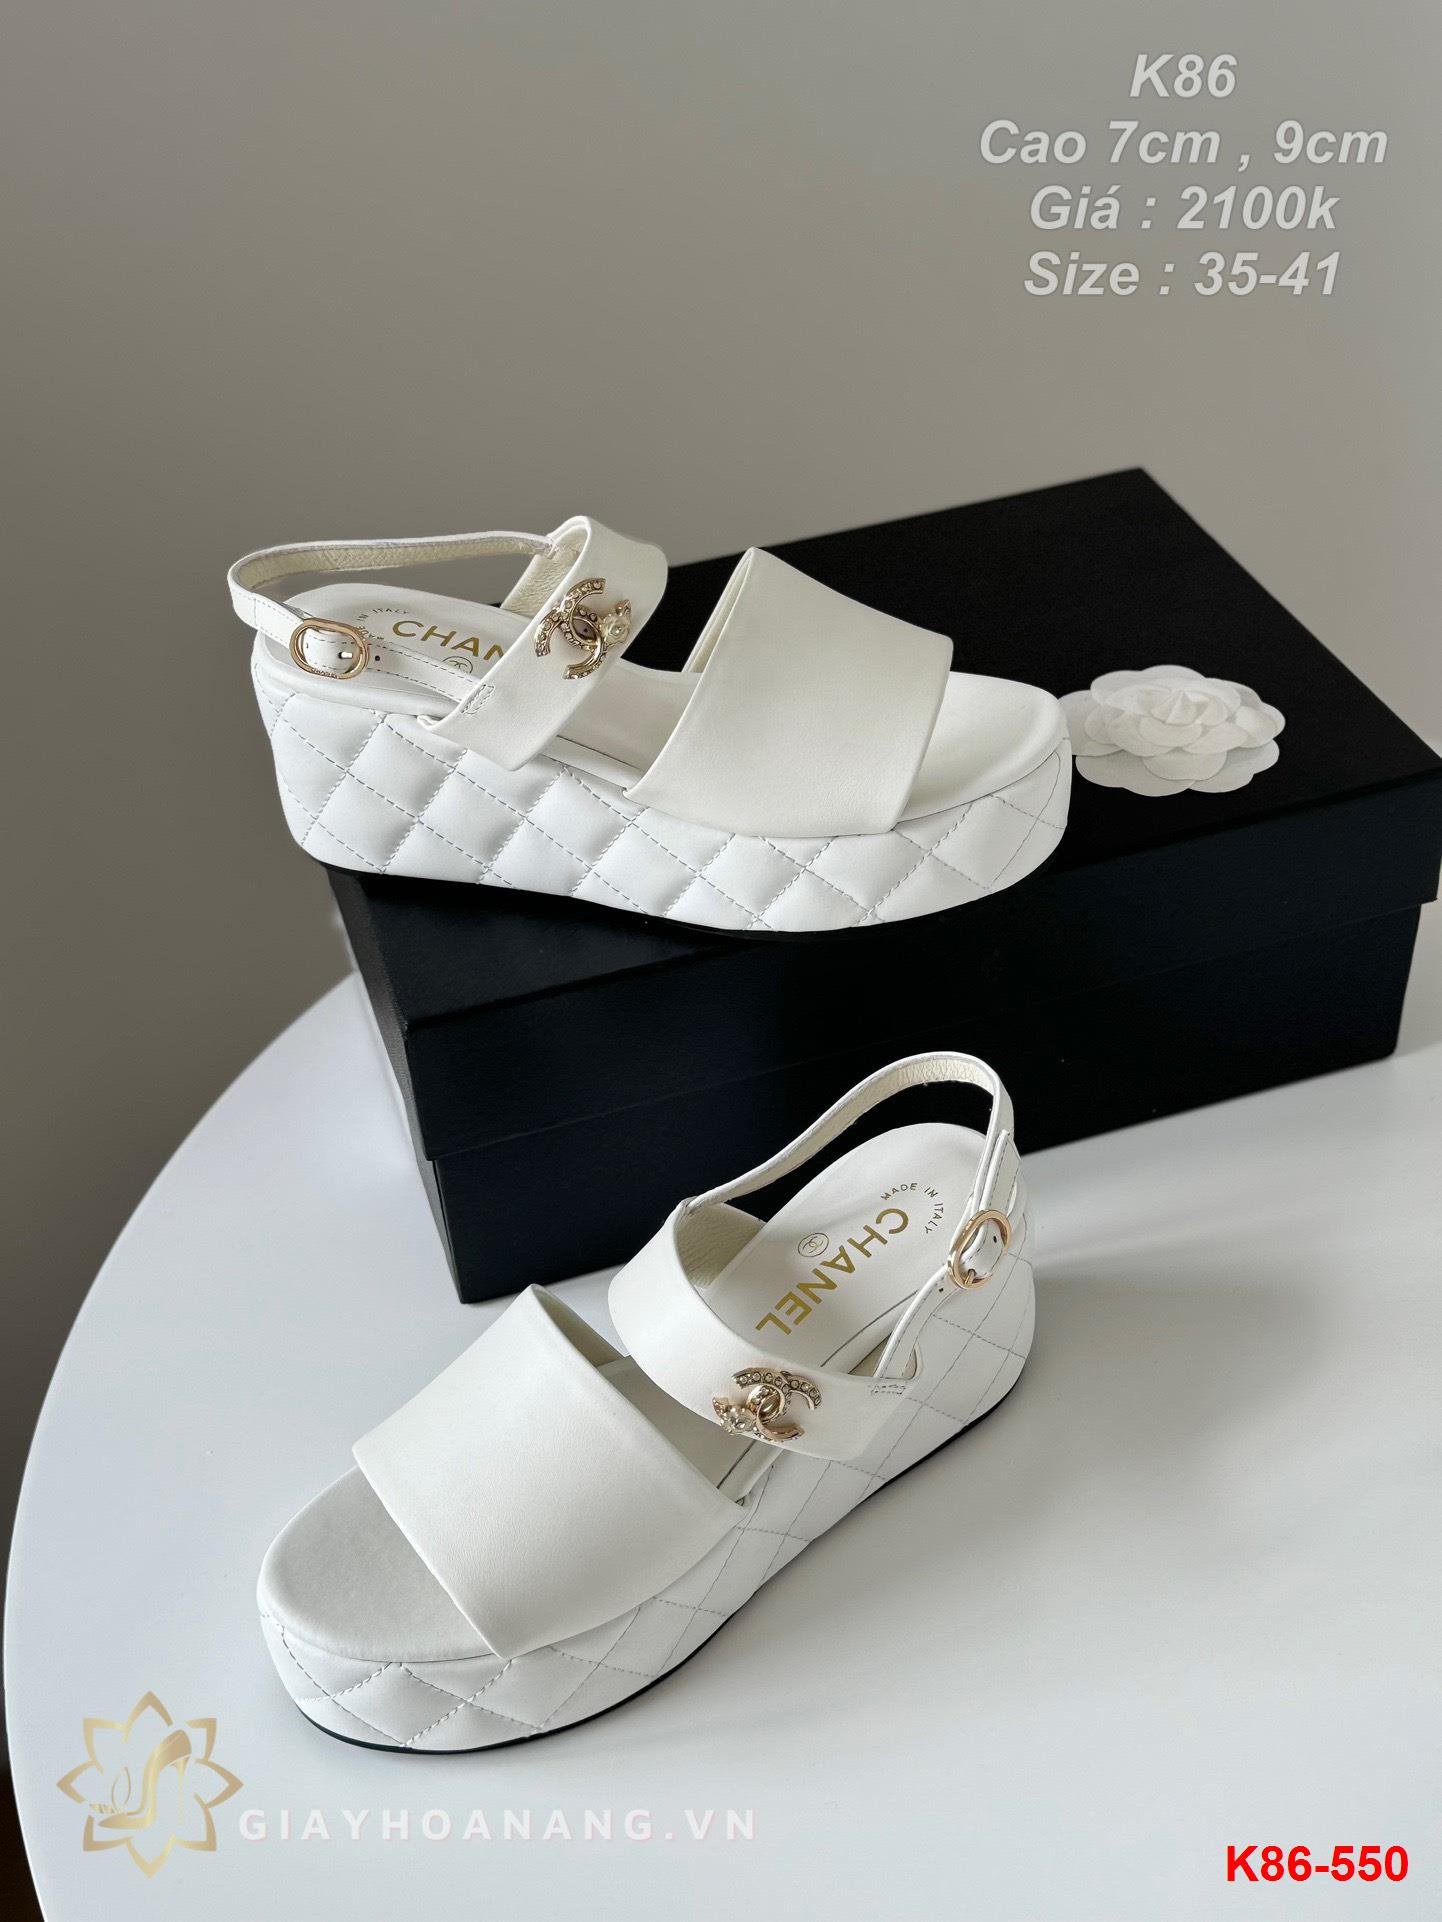 K86-550 Chanel sandal cao 7cm , 9cm siêu cấp